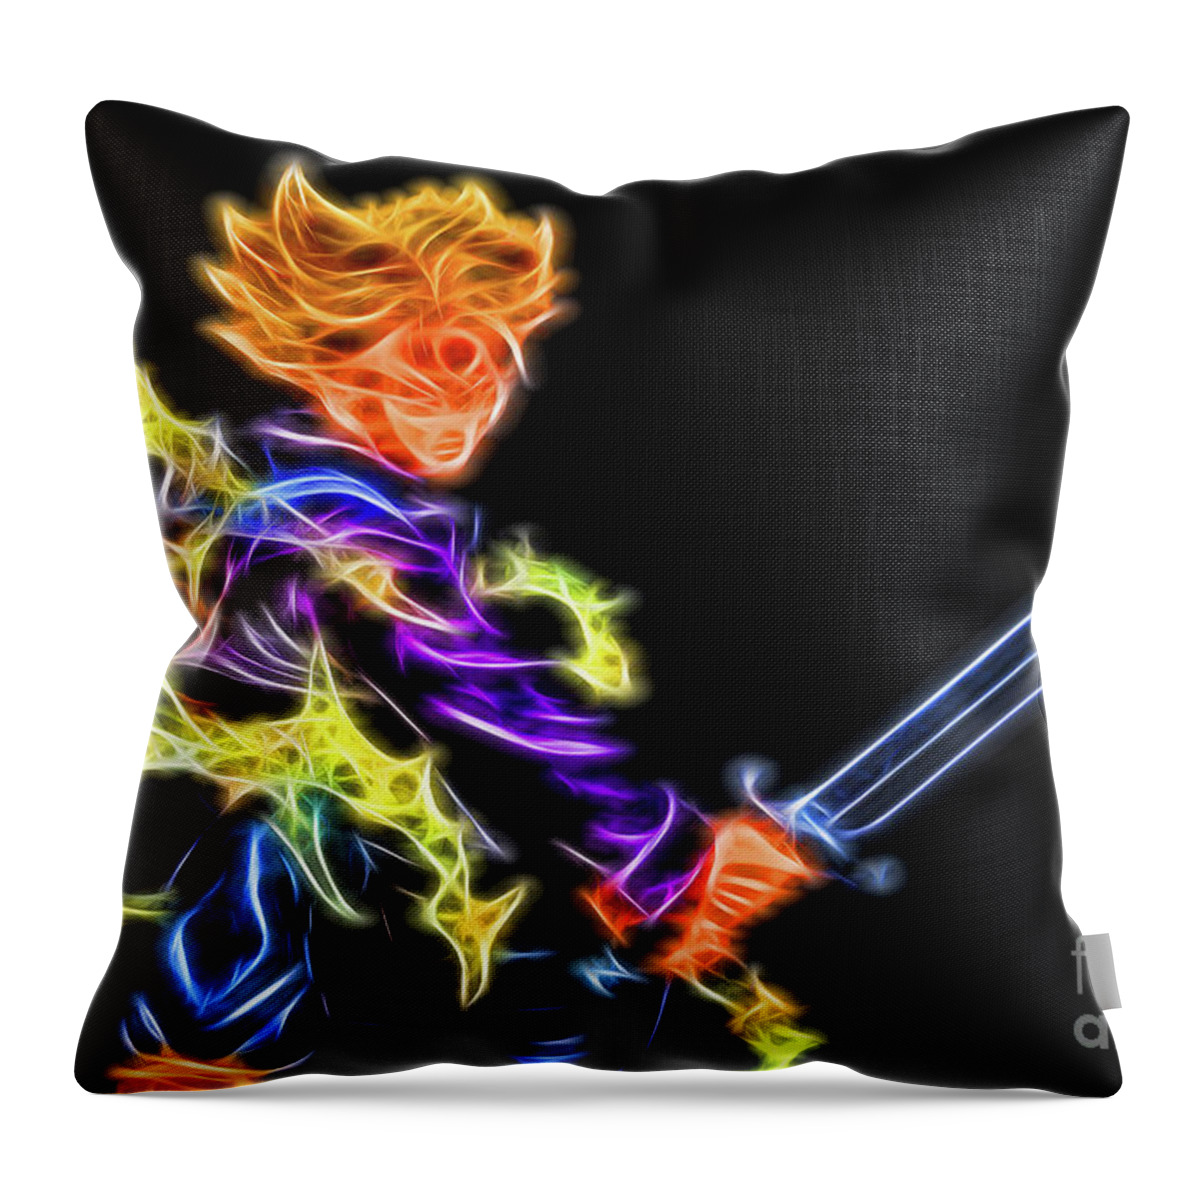 Dbz Throw Pillow featuring the digital art Battle Stance Trunks by Ray Shiu